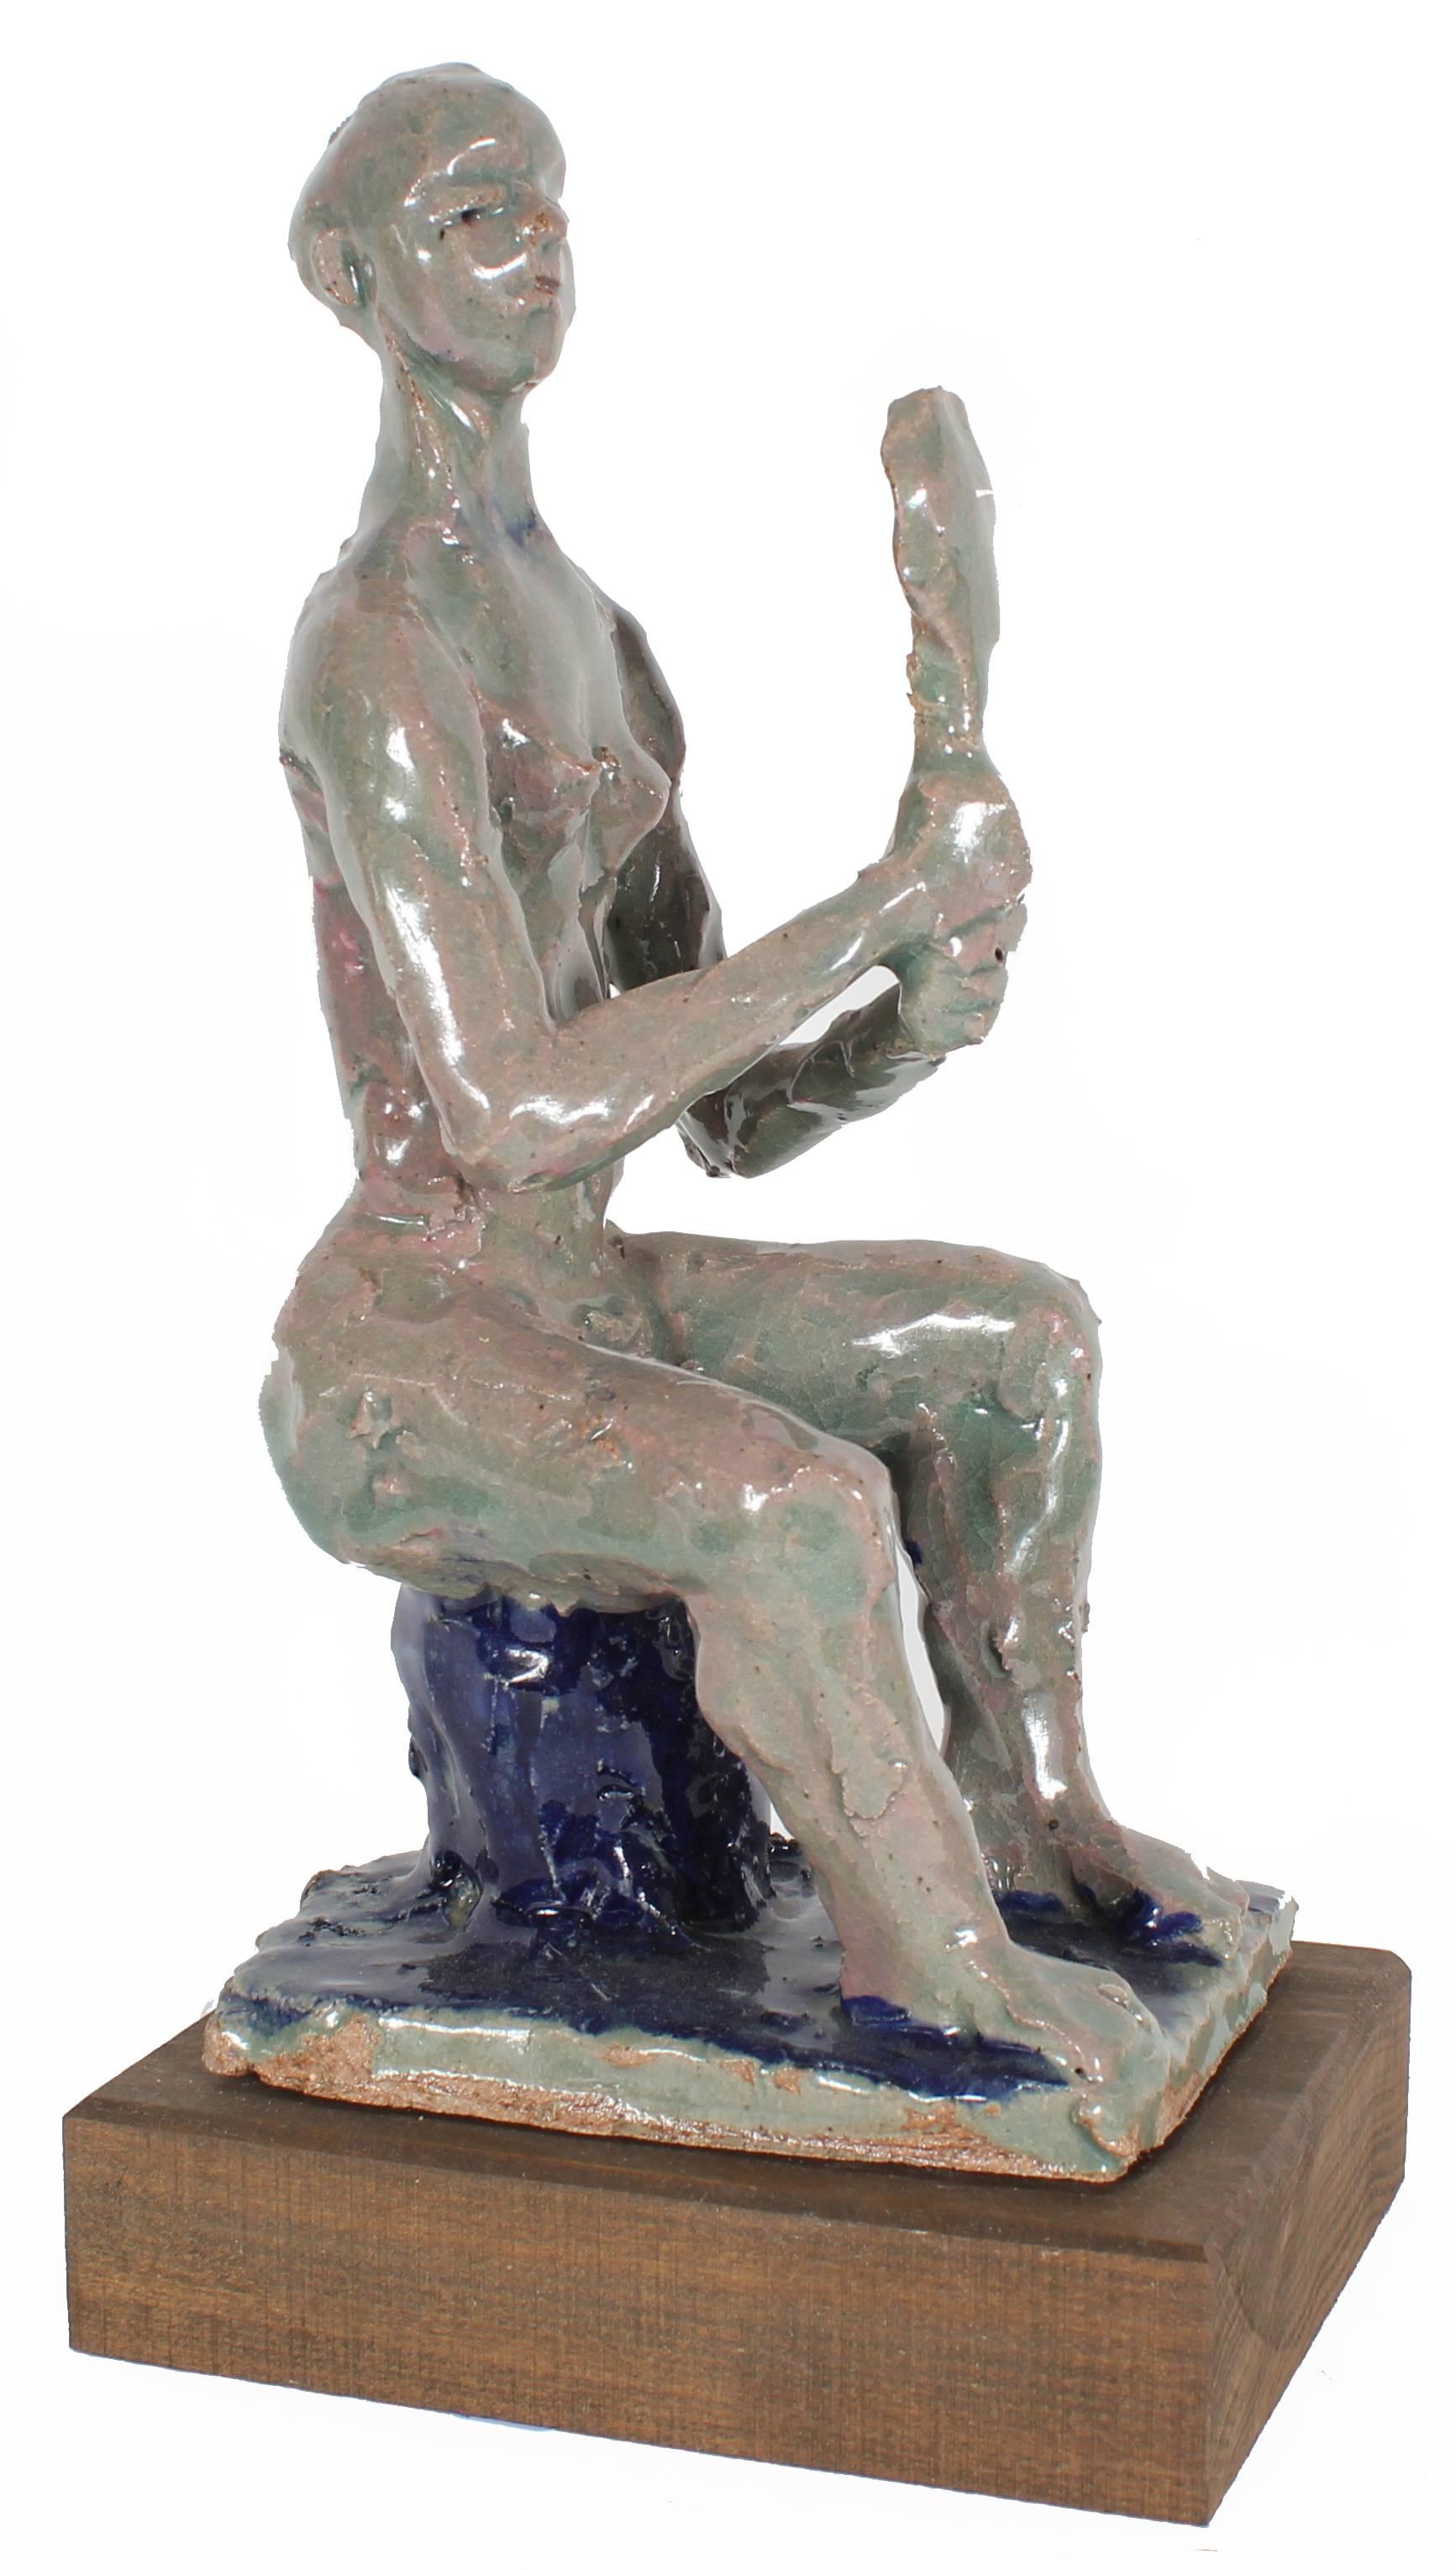 seated figure sculptures